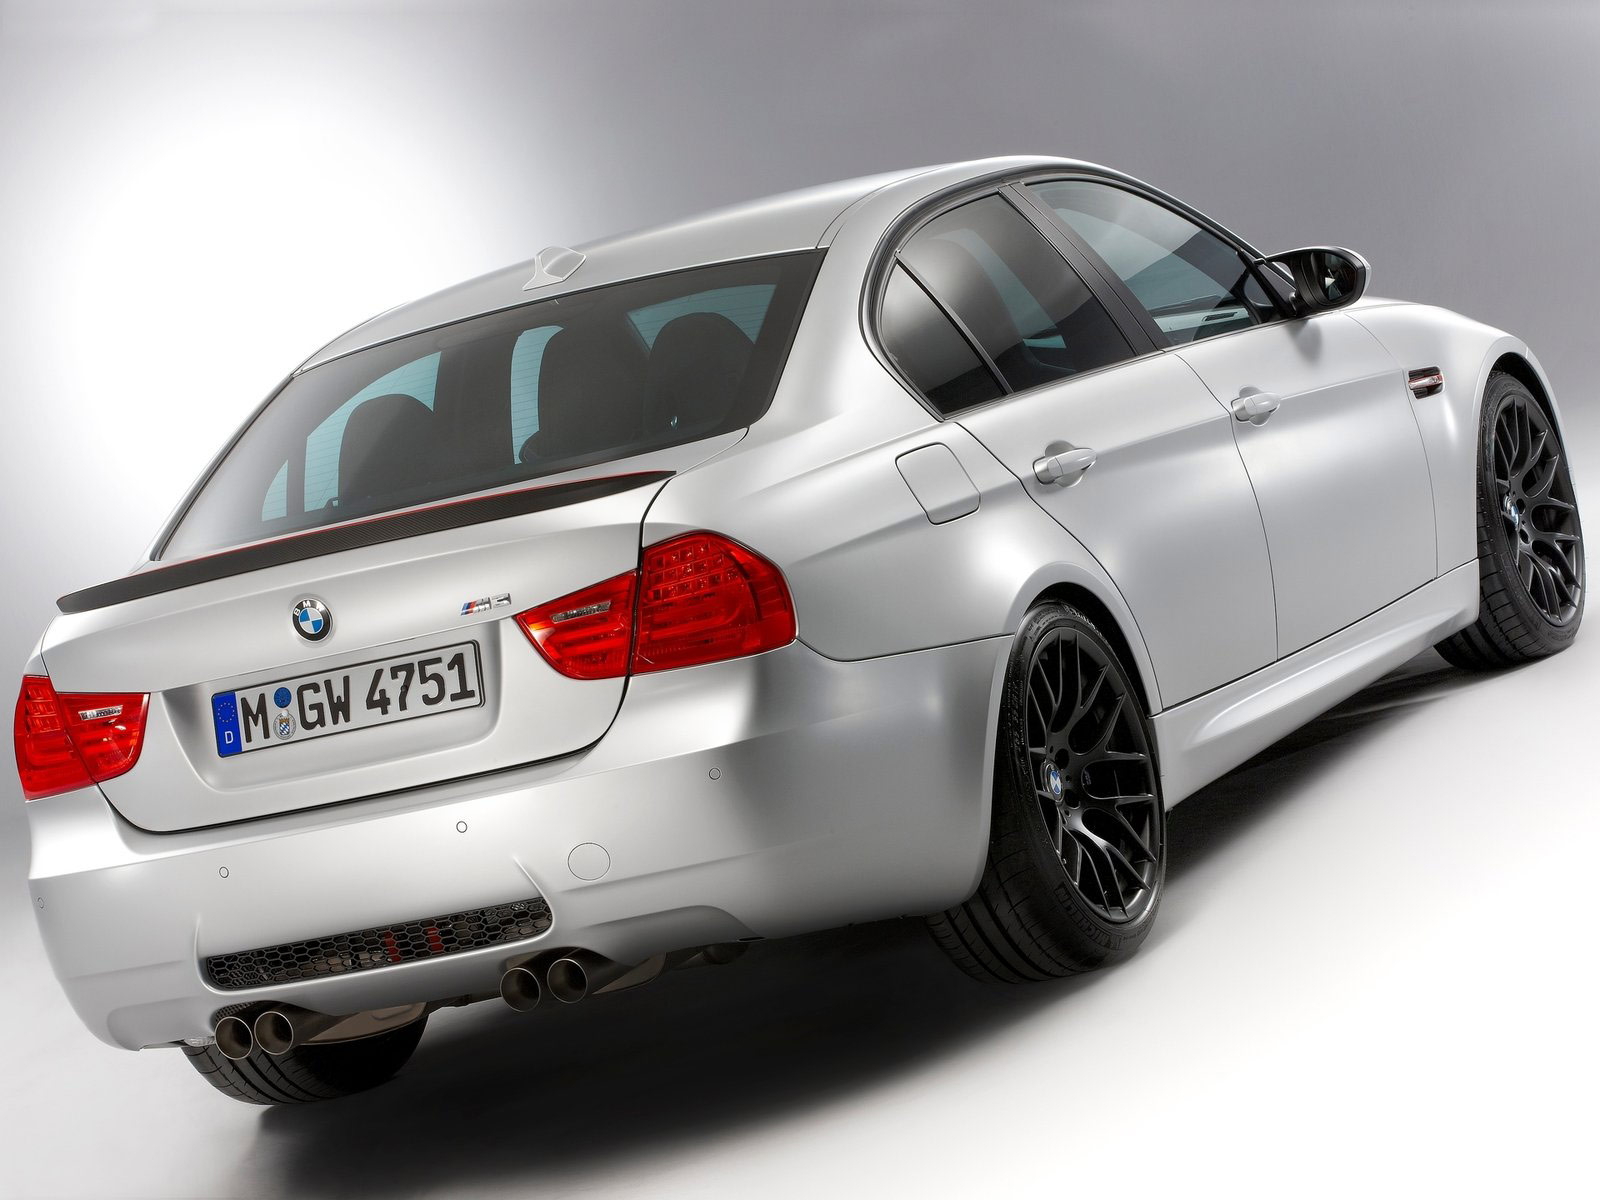 2012 BMW M3 CRT car accident lawyers info, desktop wallpapers